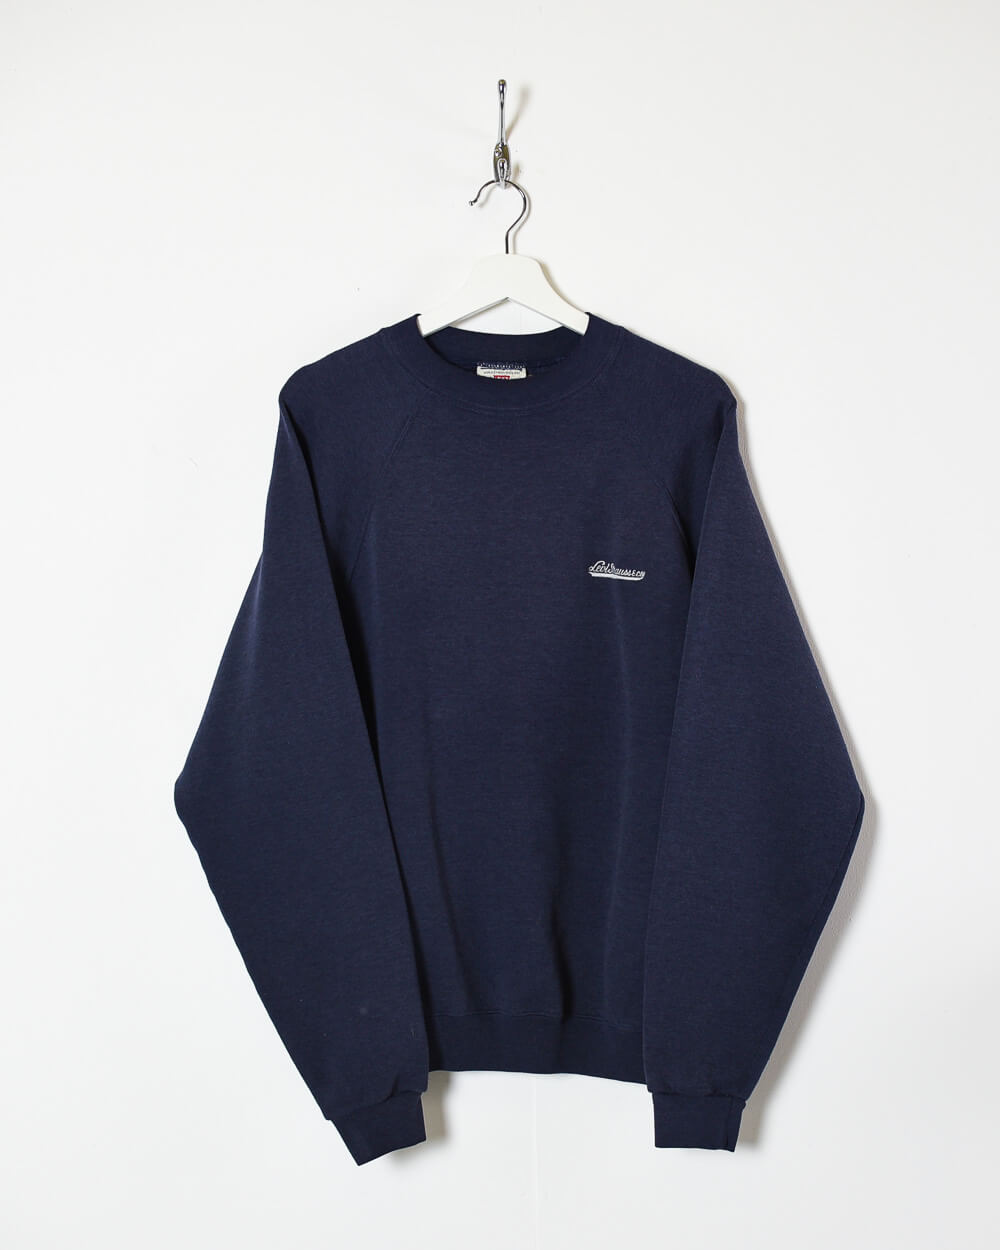 Navy Levi's Sweatshirt - Medium